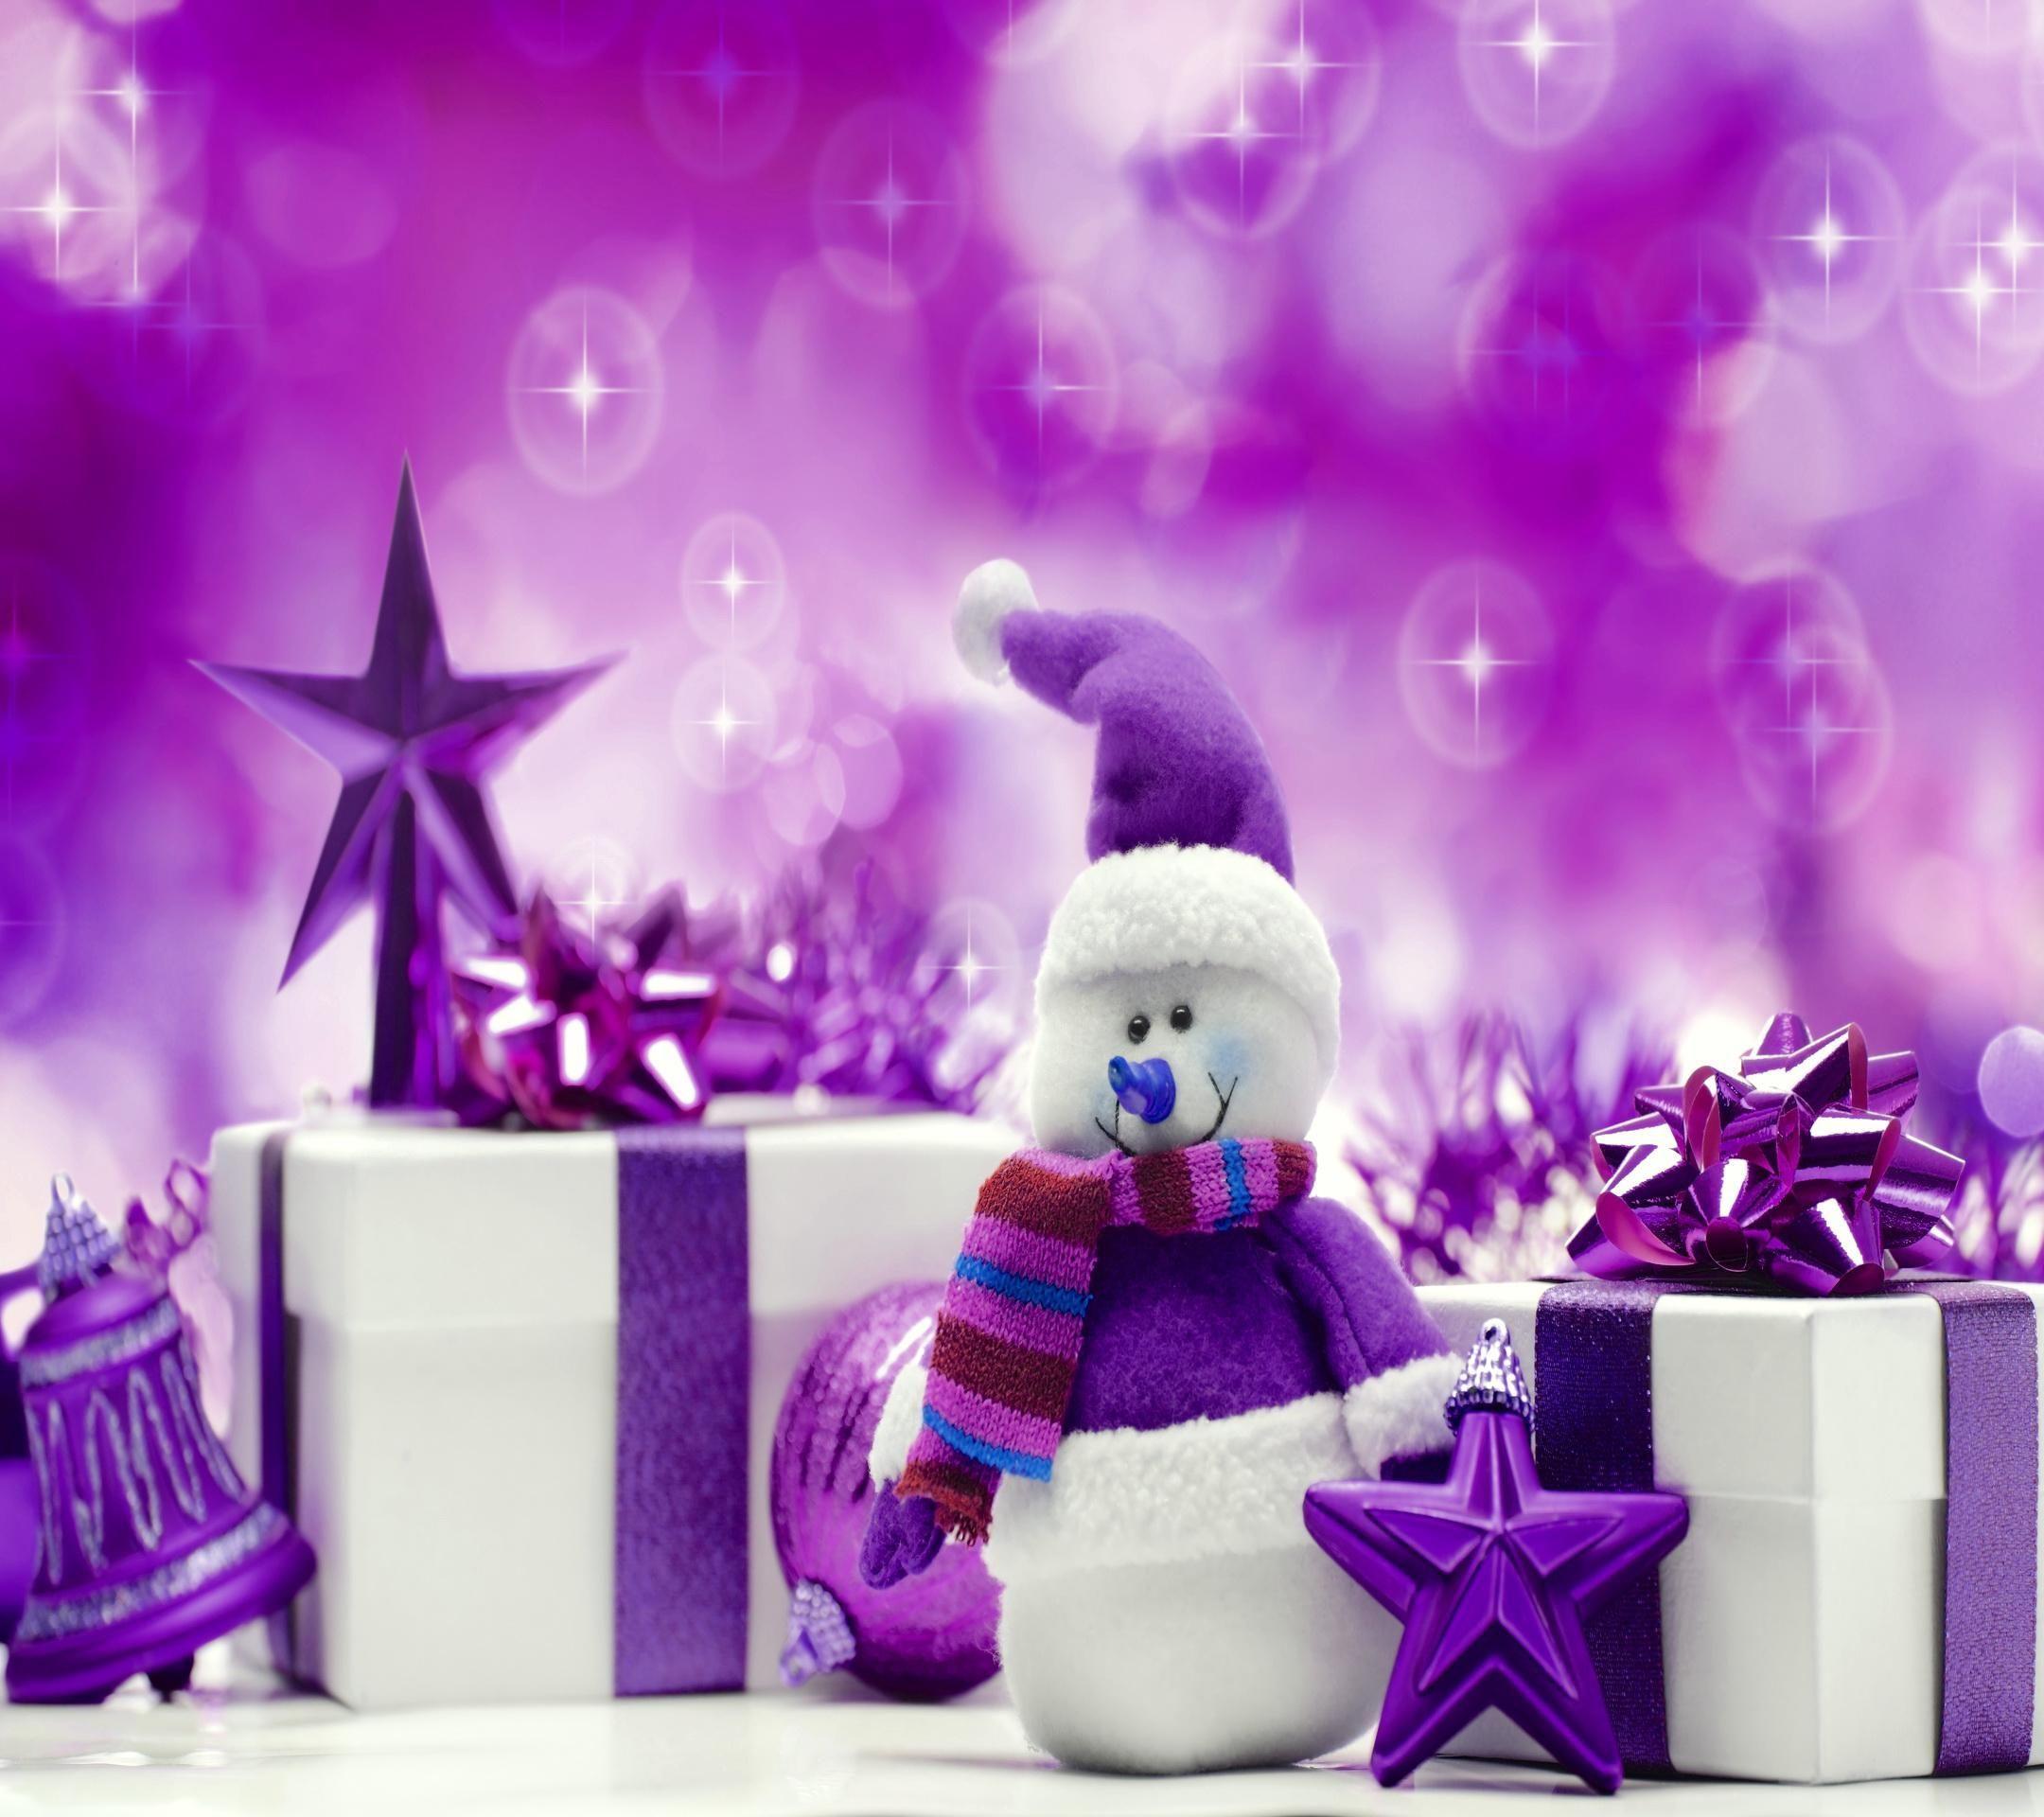 Purple Christmas Wallpapers Top Free Purple Christmas Backgrounds